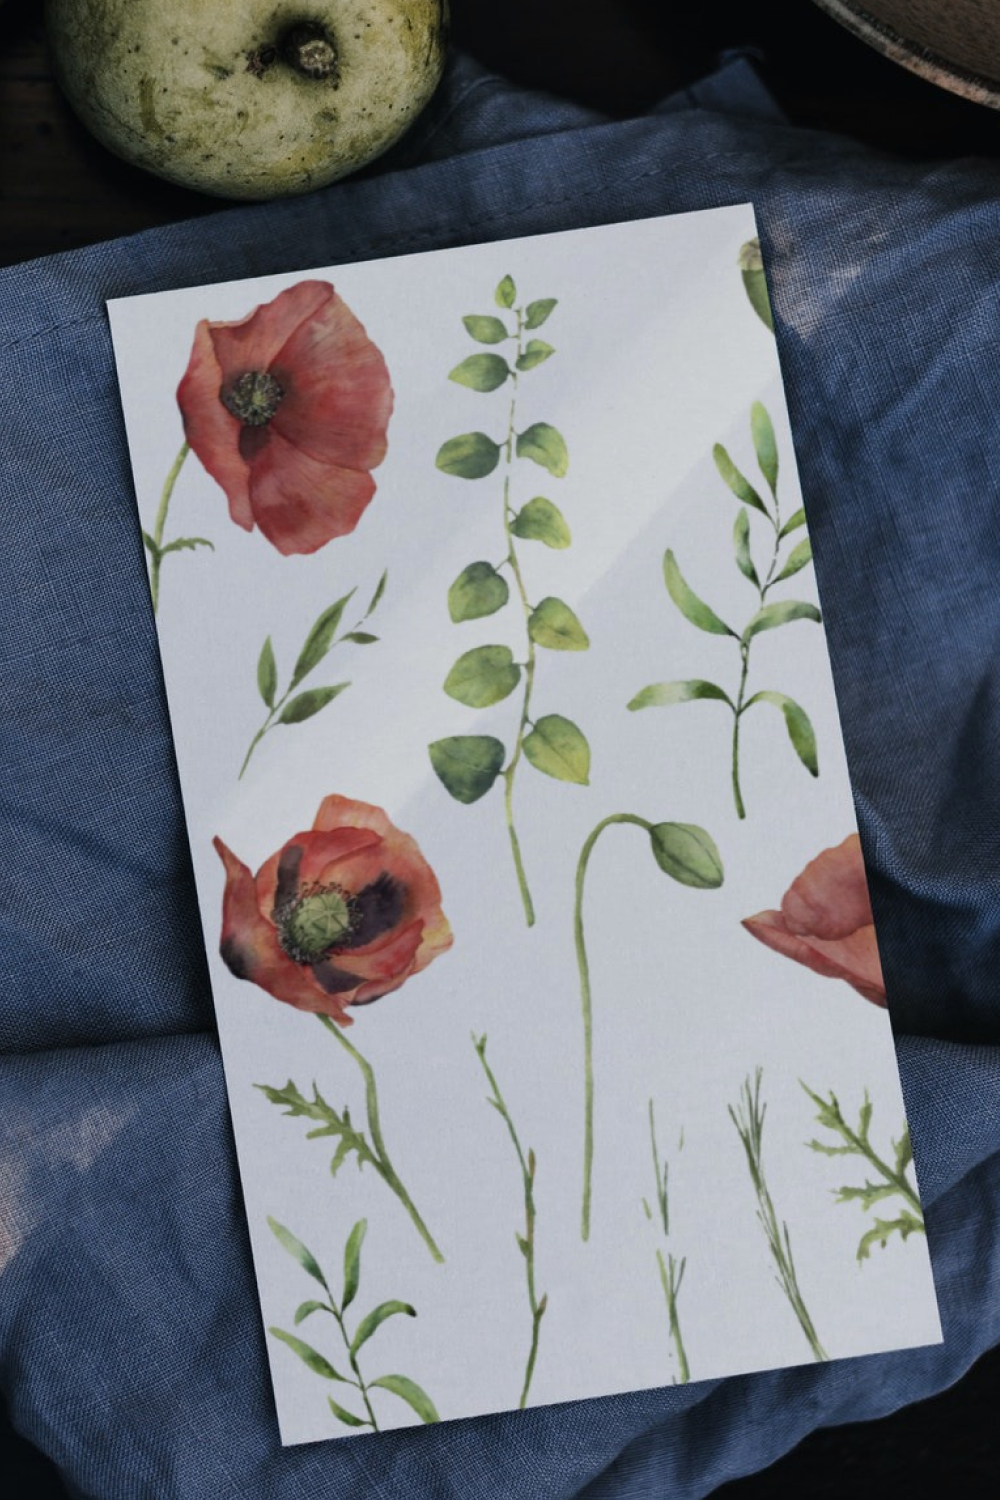 Print of hand drawn poppy flowers.